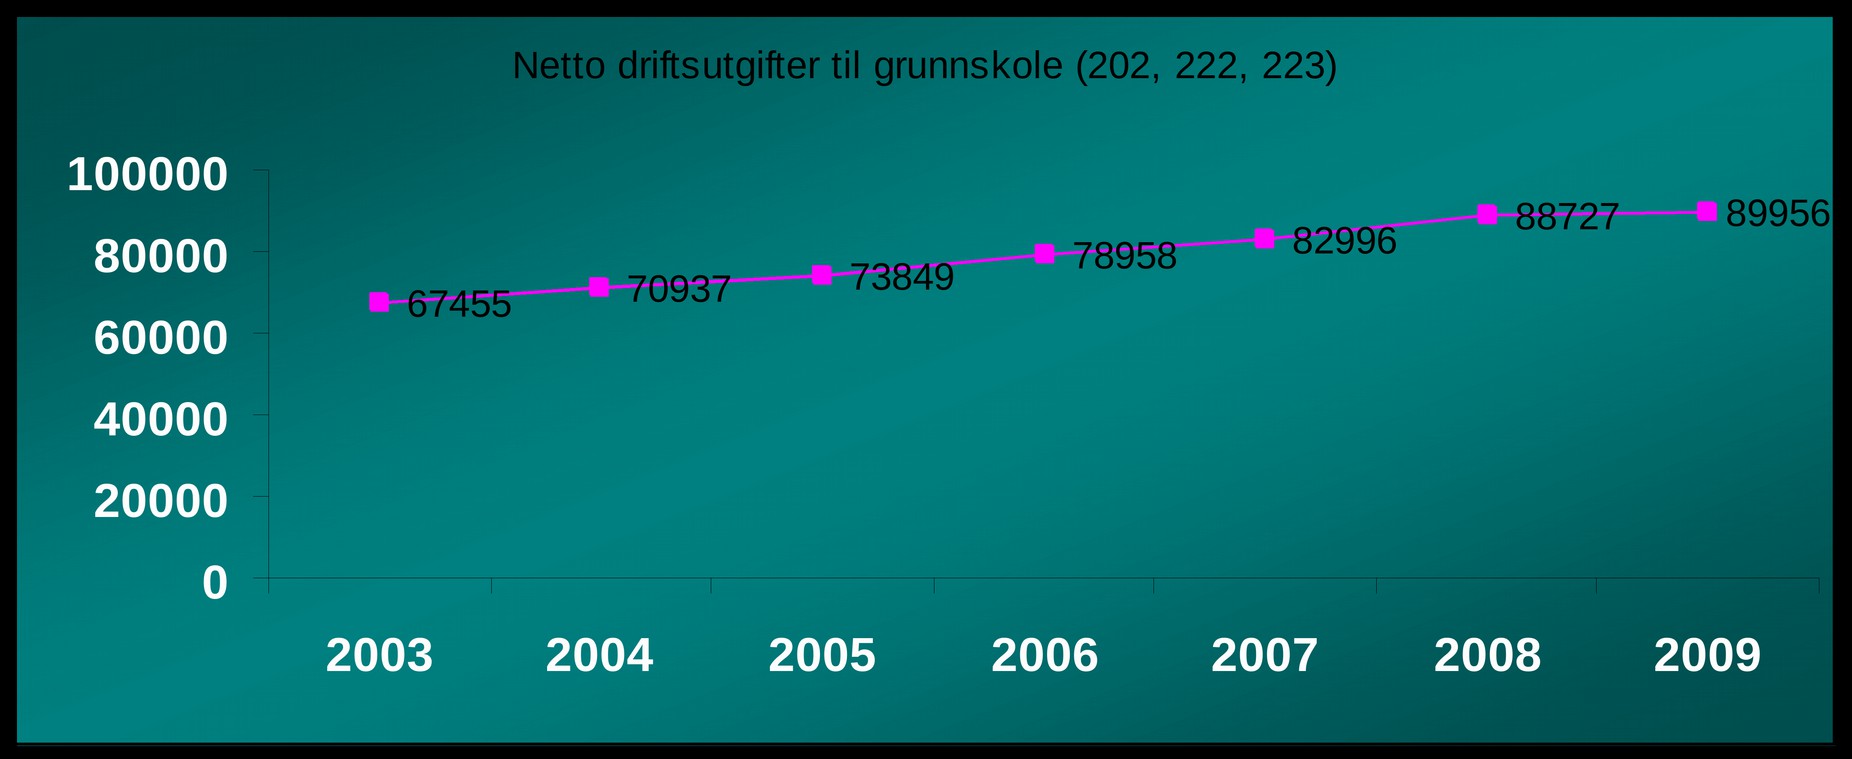 Drift av grunnskole i Alstahaug utgjorde i 2009 nær 90 mill. i netto utgift. En elevplass i Alstahaug kommune kostet i 2009 ca 94 000.